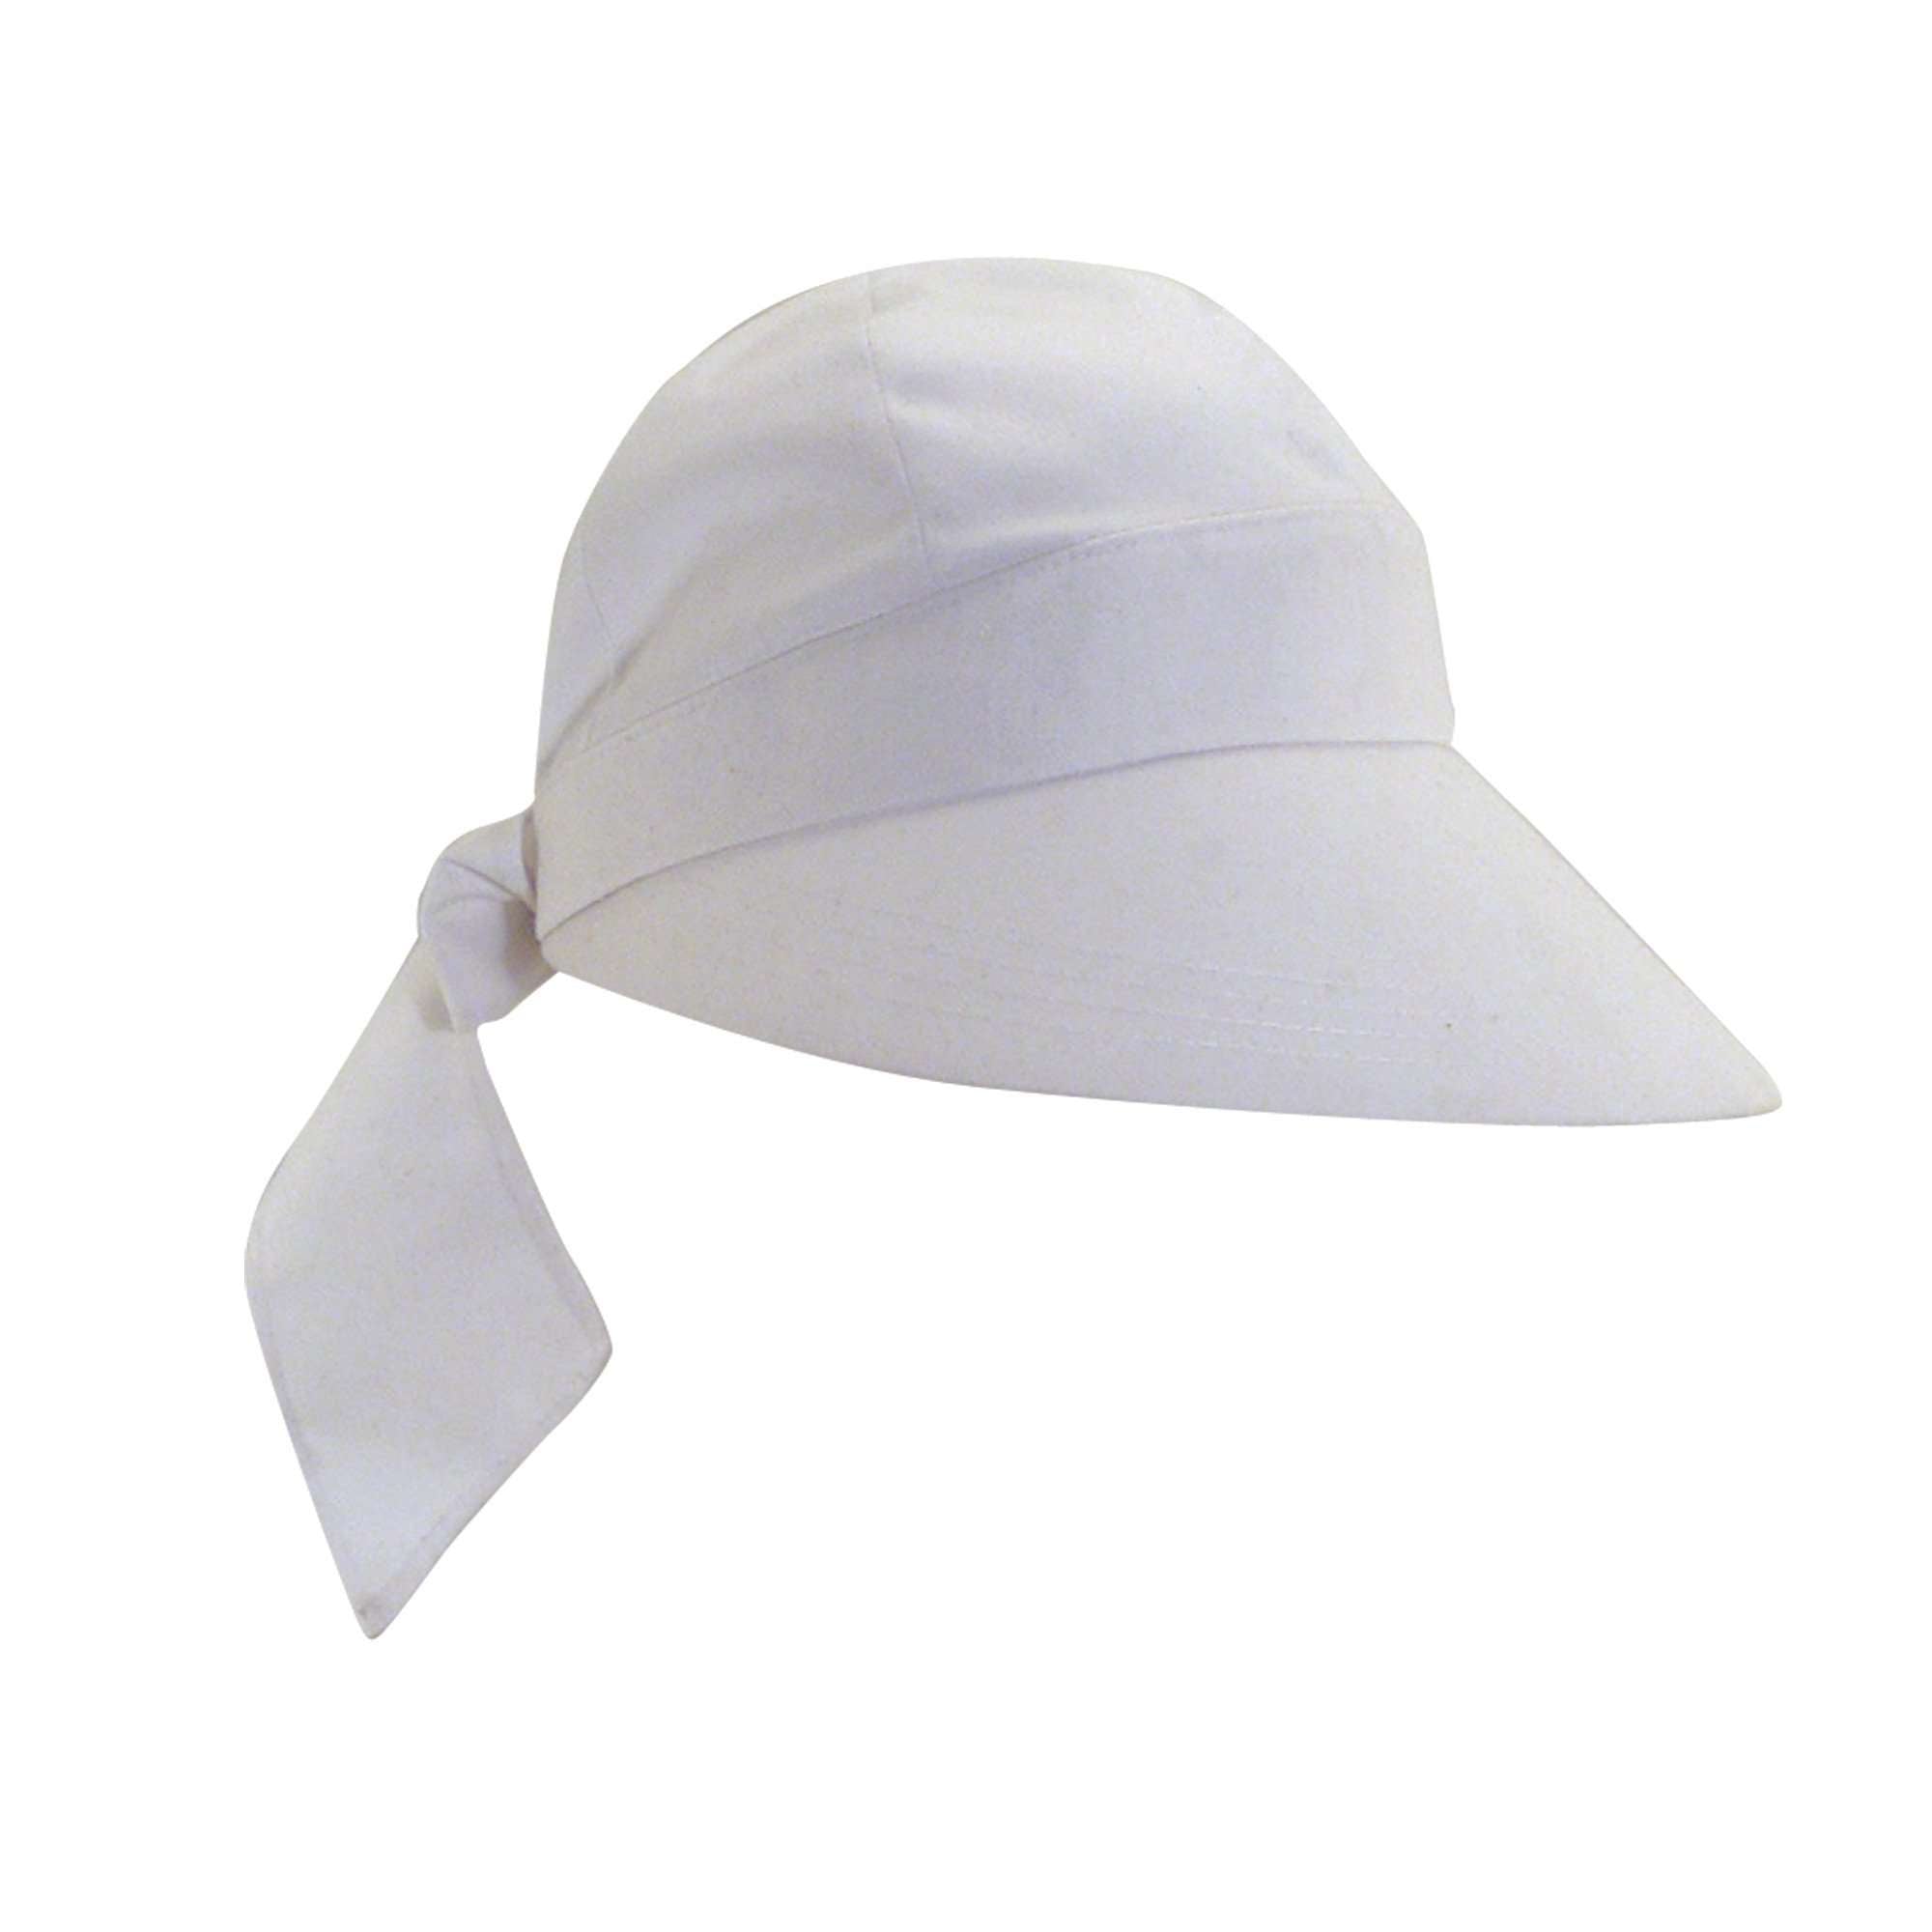 Cotton Facesaver Cap with Bow - Cappelli Hats Cap Cappelli Straworld l70swWH White Medium (57 cm) 